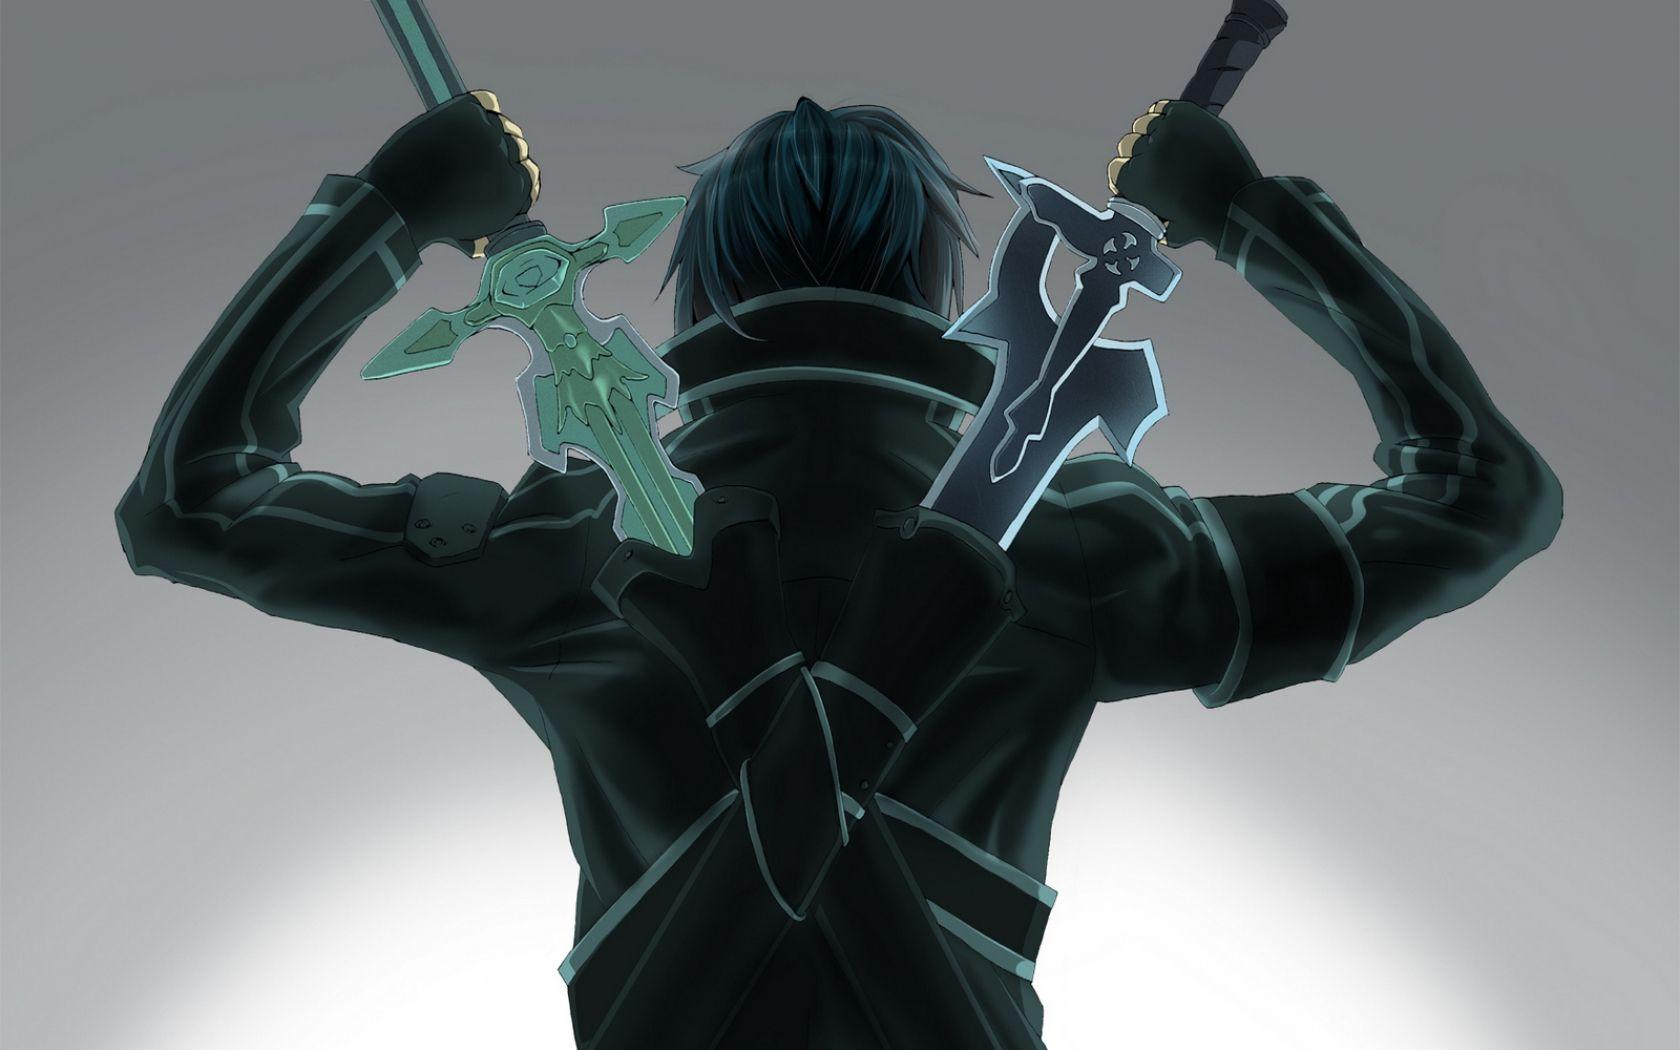 Sword Art Online HD Wallpaper and Background